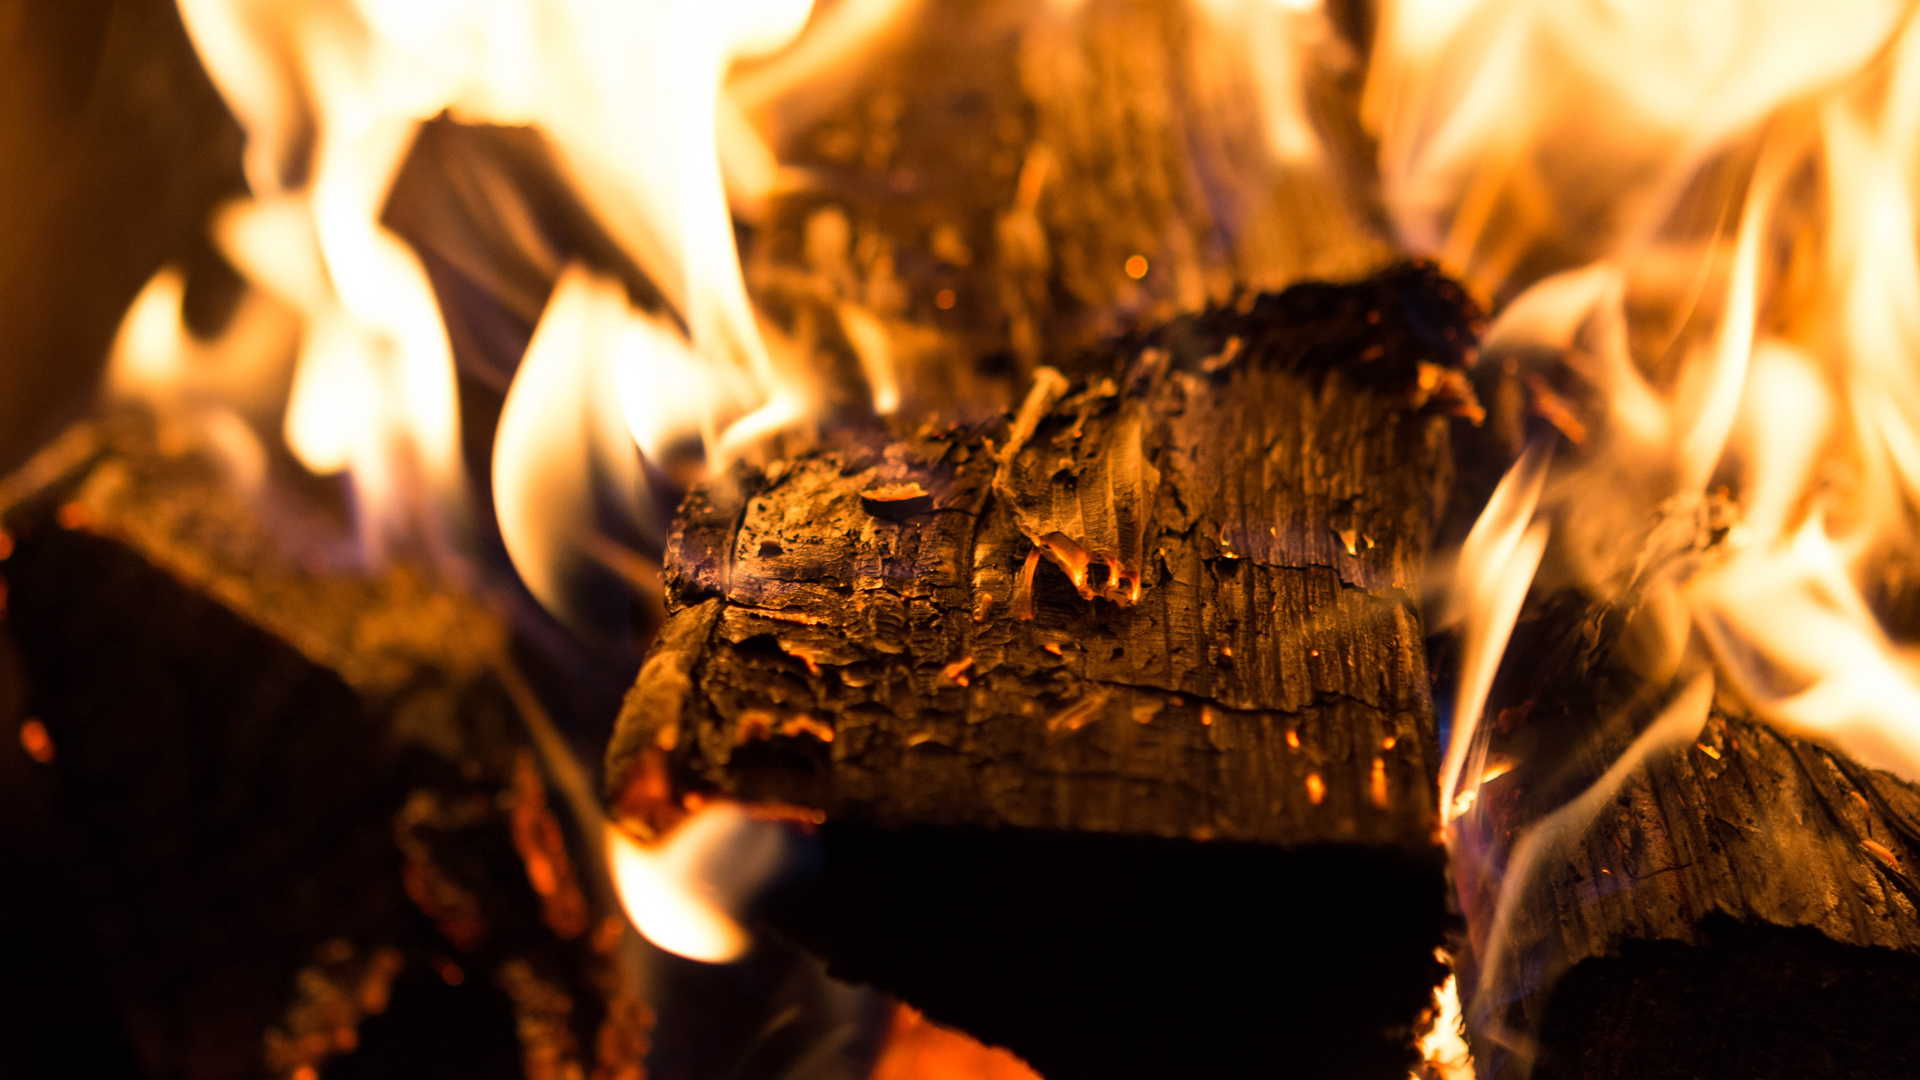 Burning Yule log in a fireplace